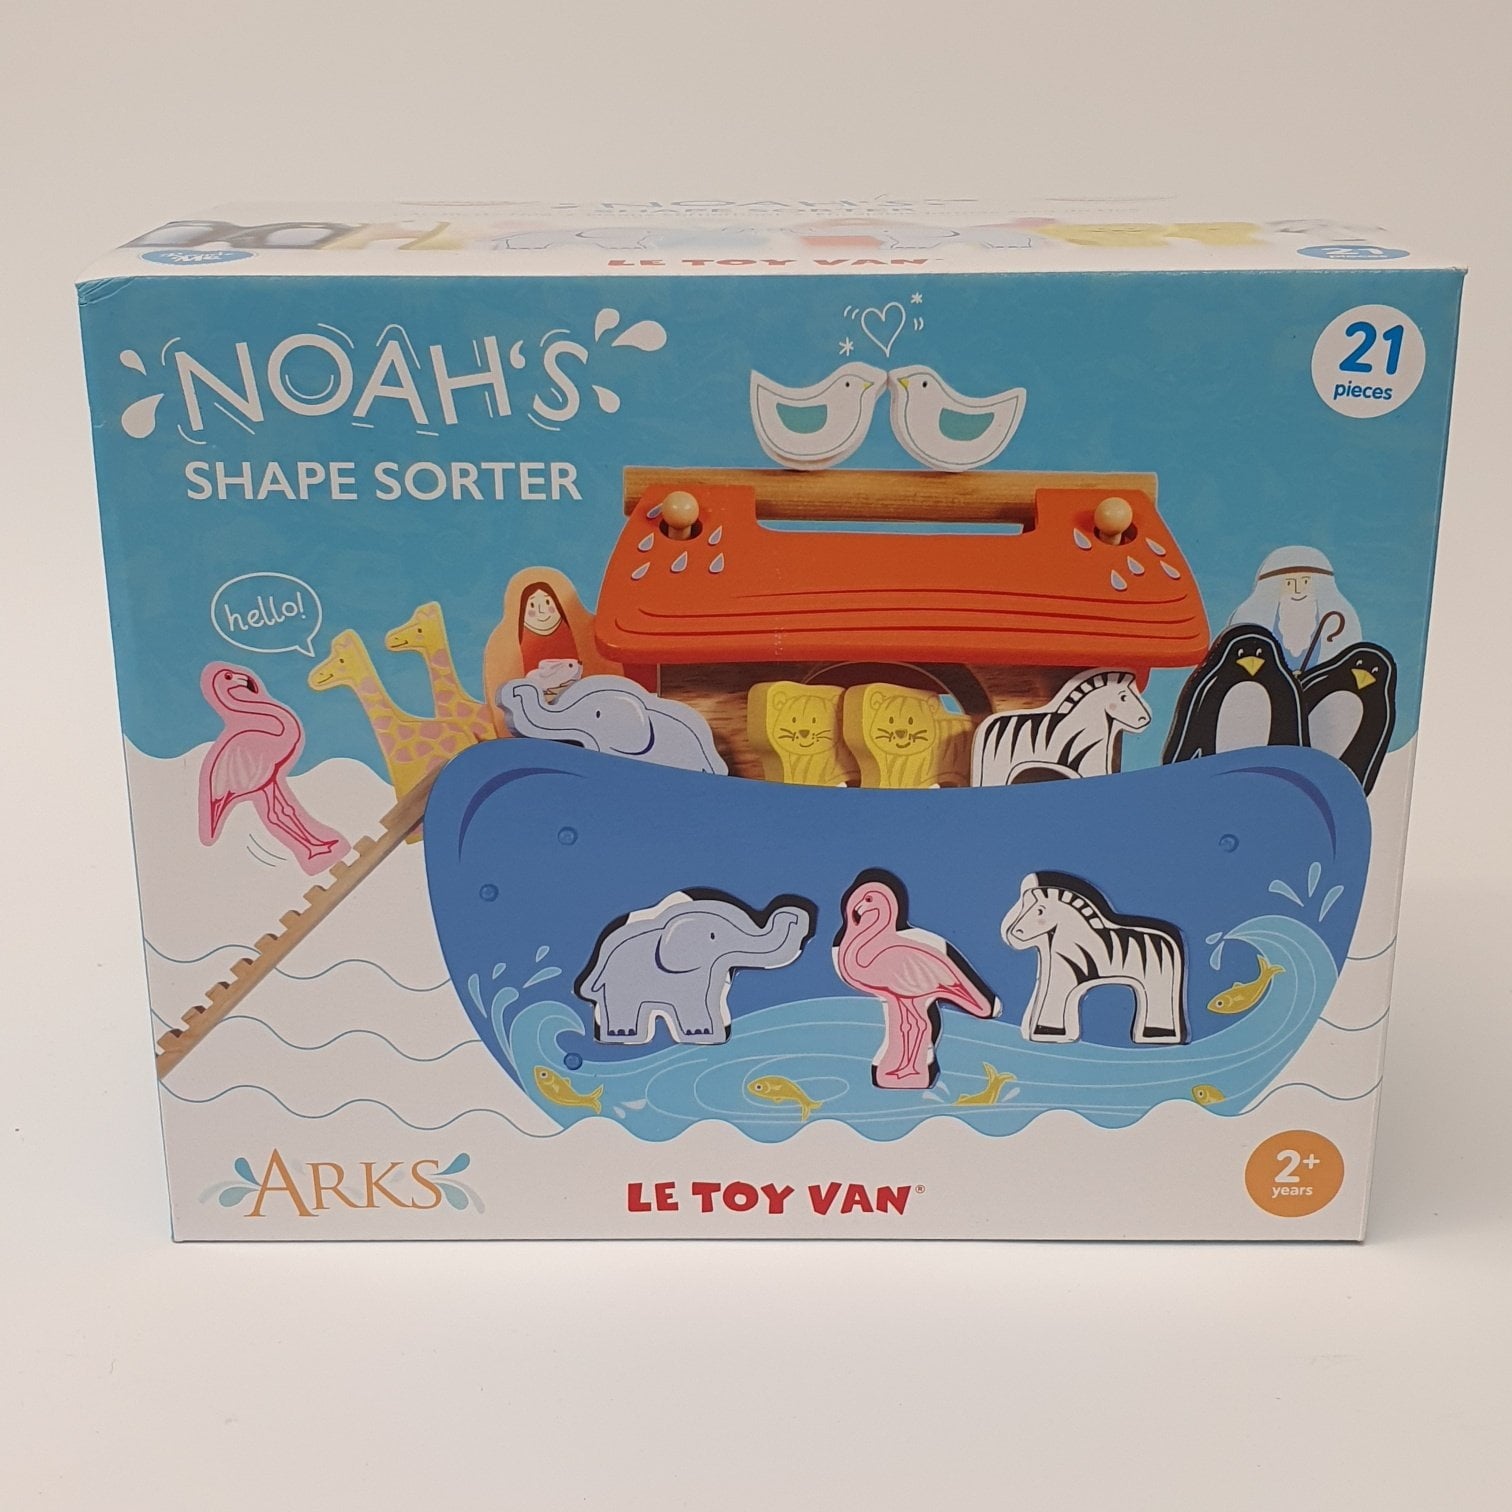 le toy van noah's shape sorter